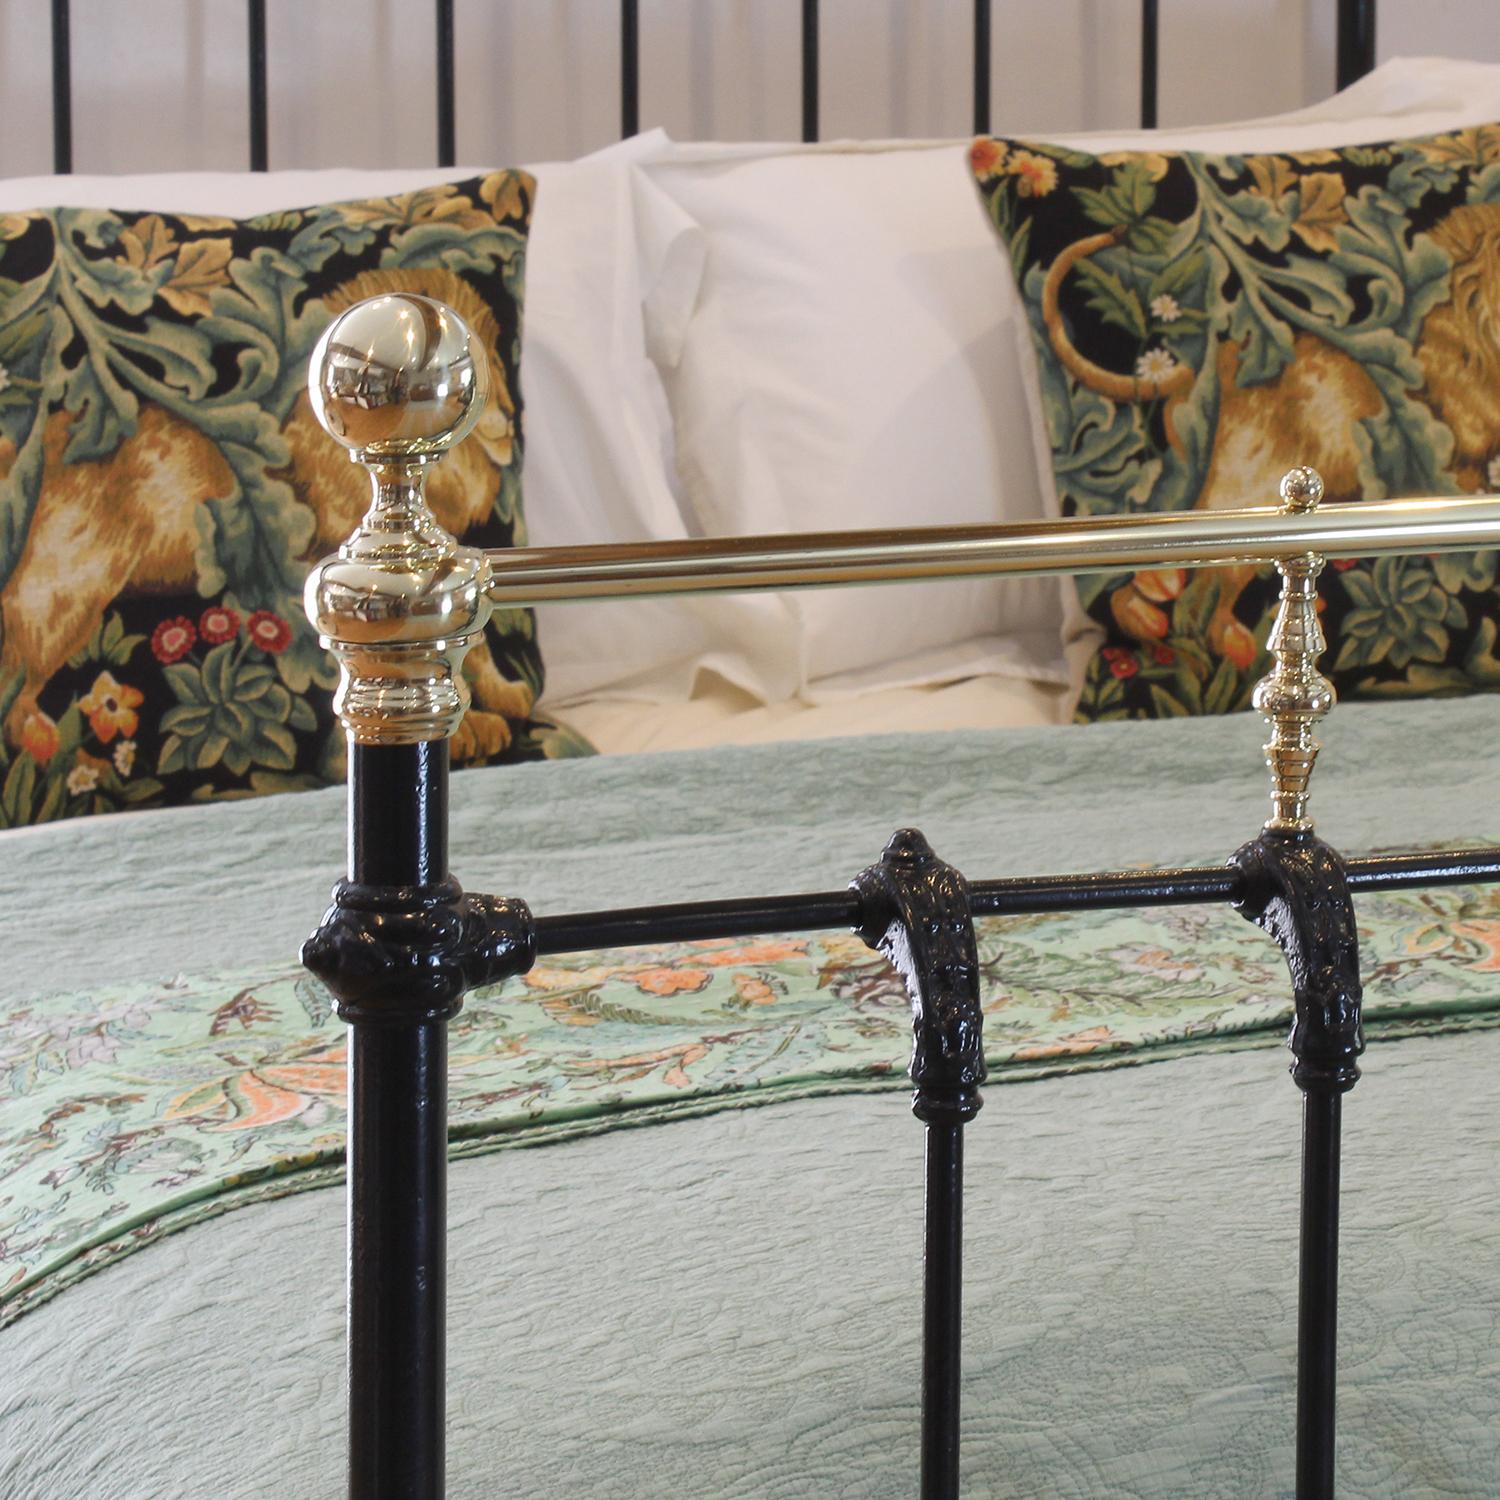 Cast Victorian Antique Bed in Black, MK281